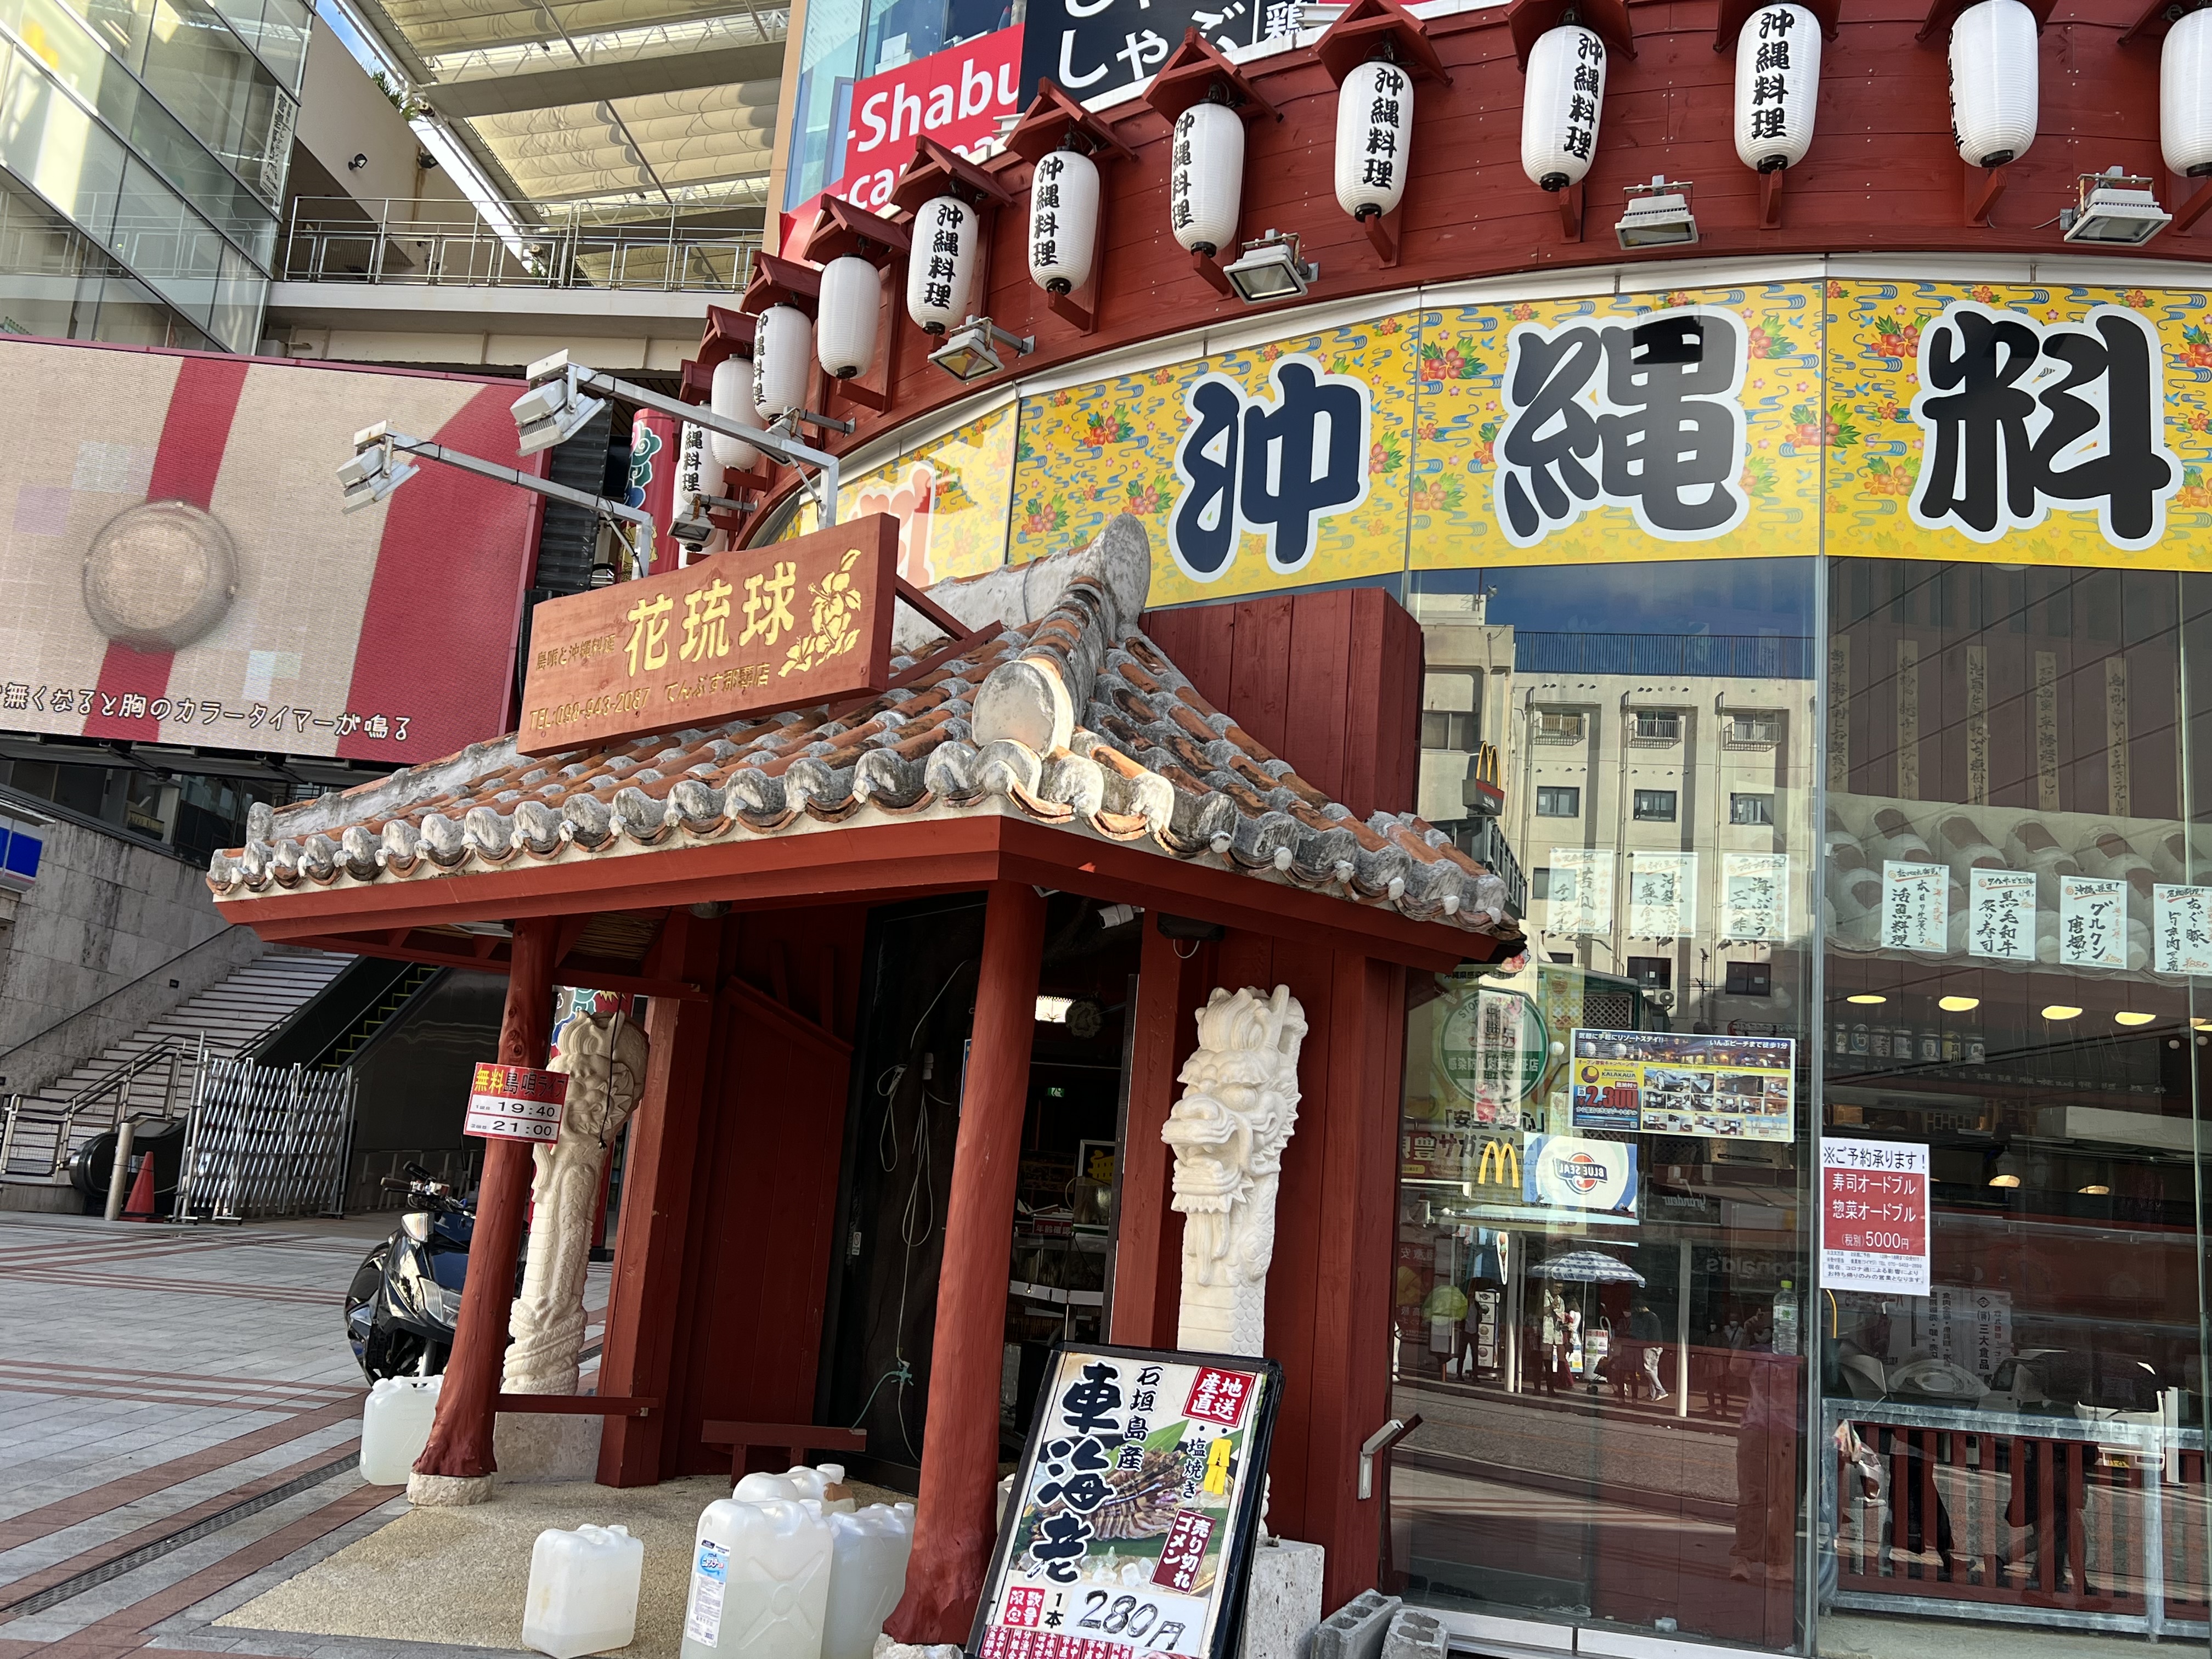 First Makishi Public Market: Okinawa’s Secret Treasure Trove